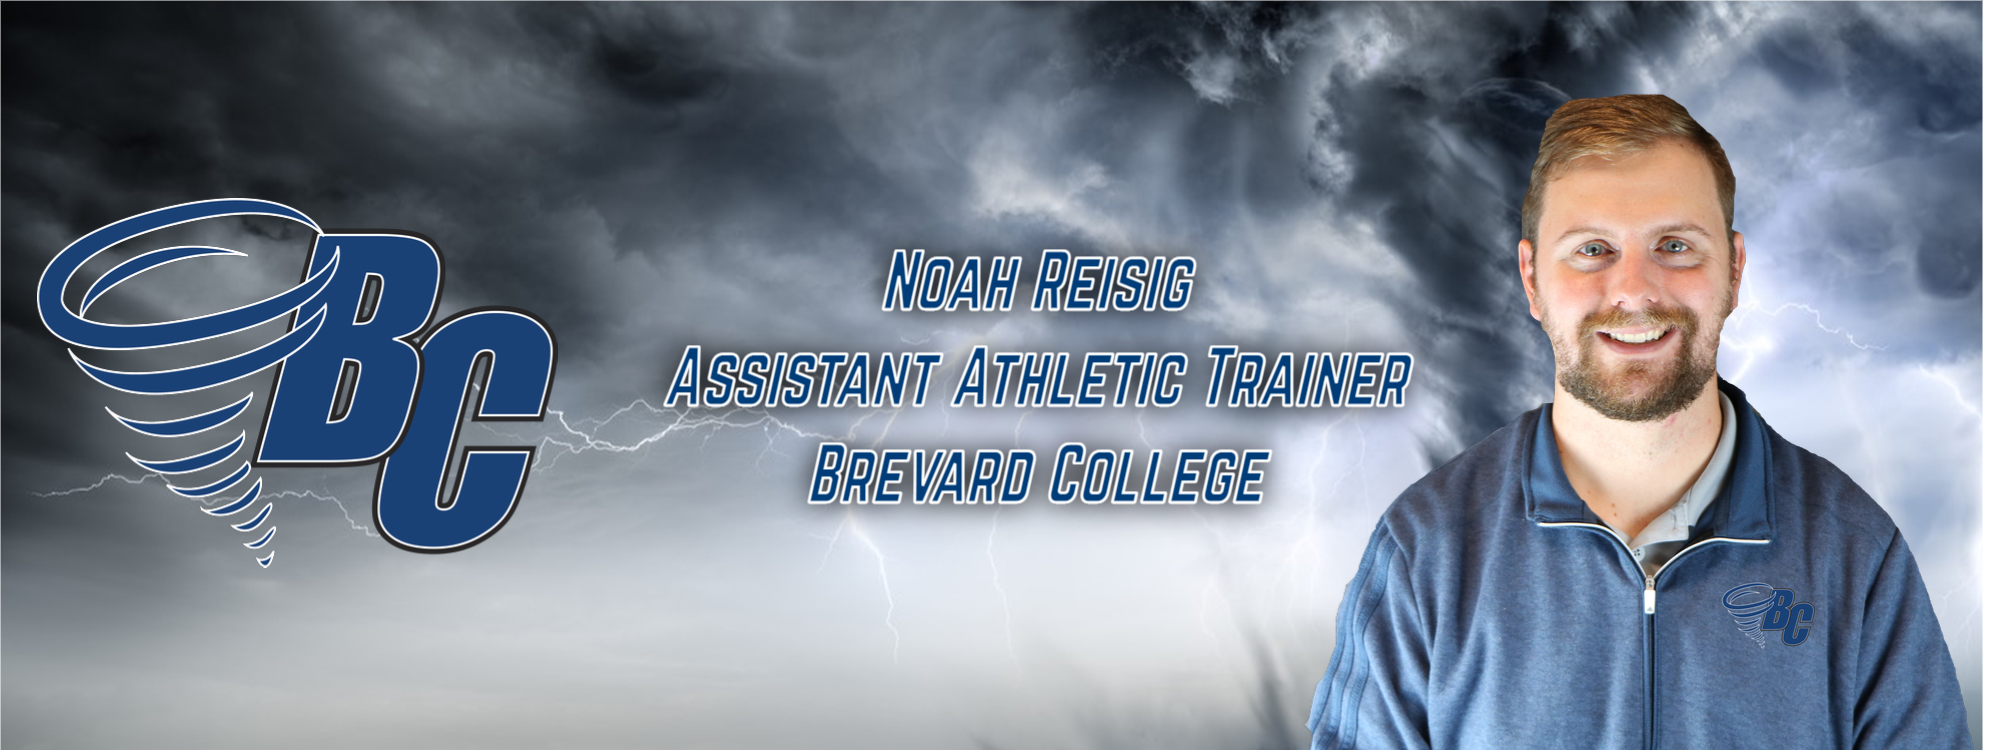 Noah Reisig Named Assistant Athletic Trainer at Brevard College